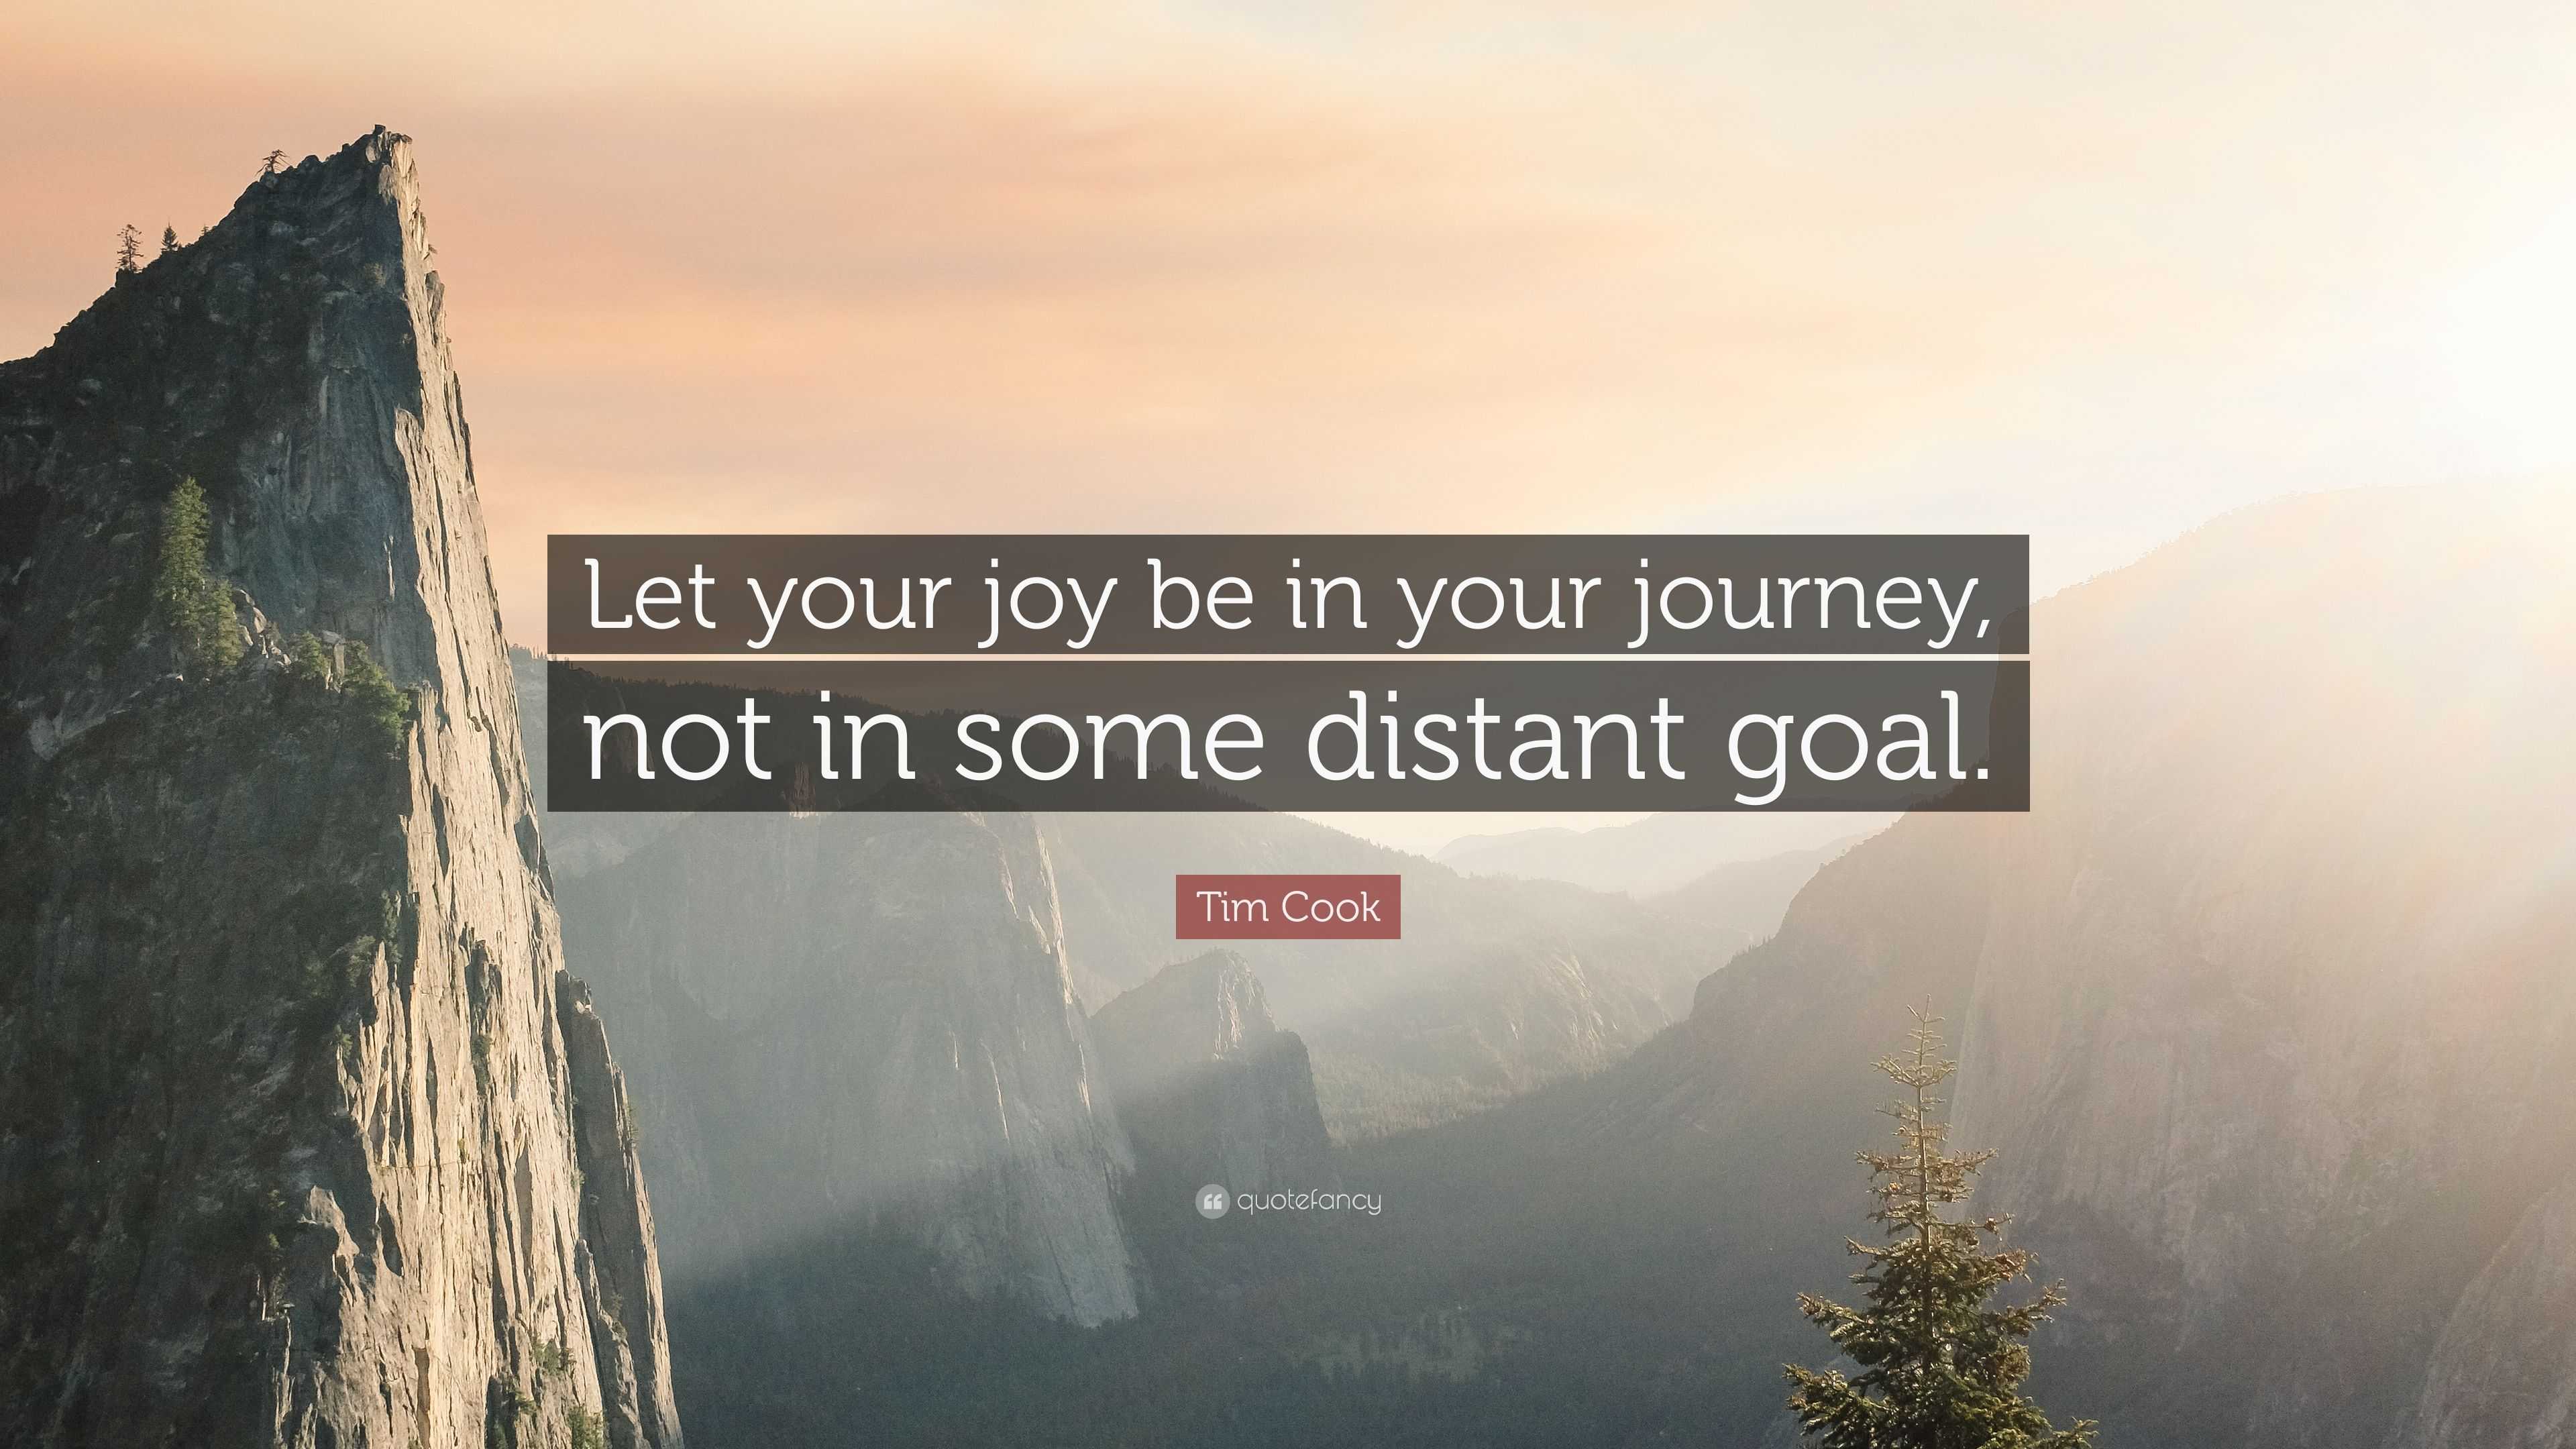 enjoy the journey not the goal